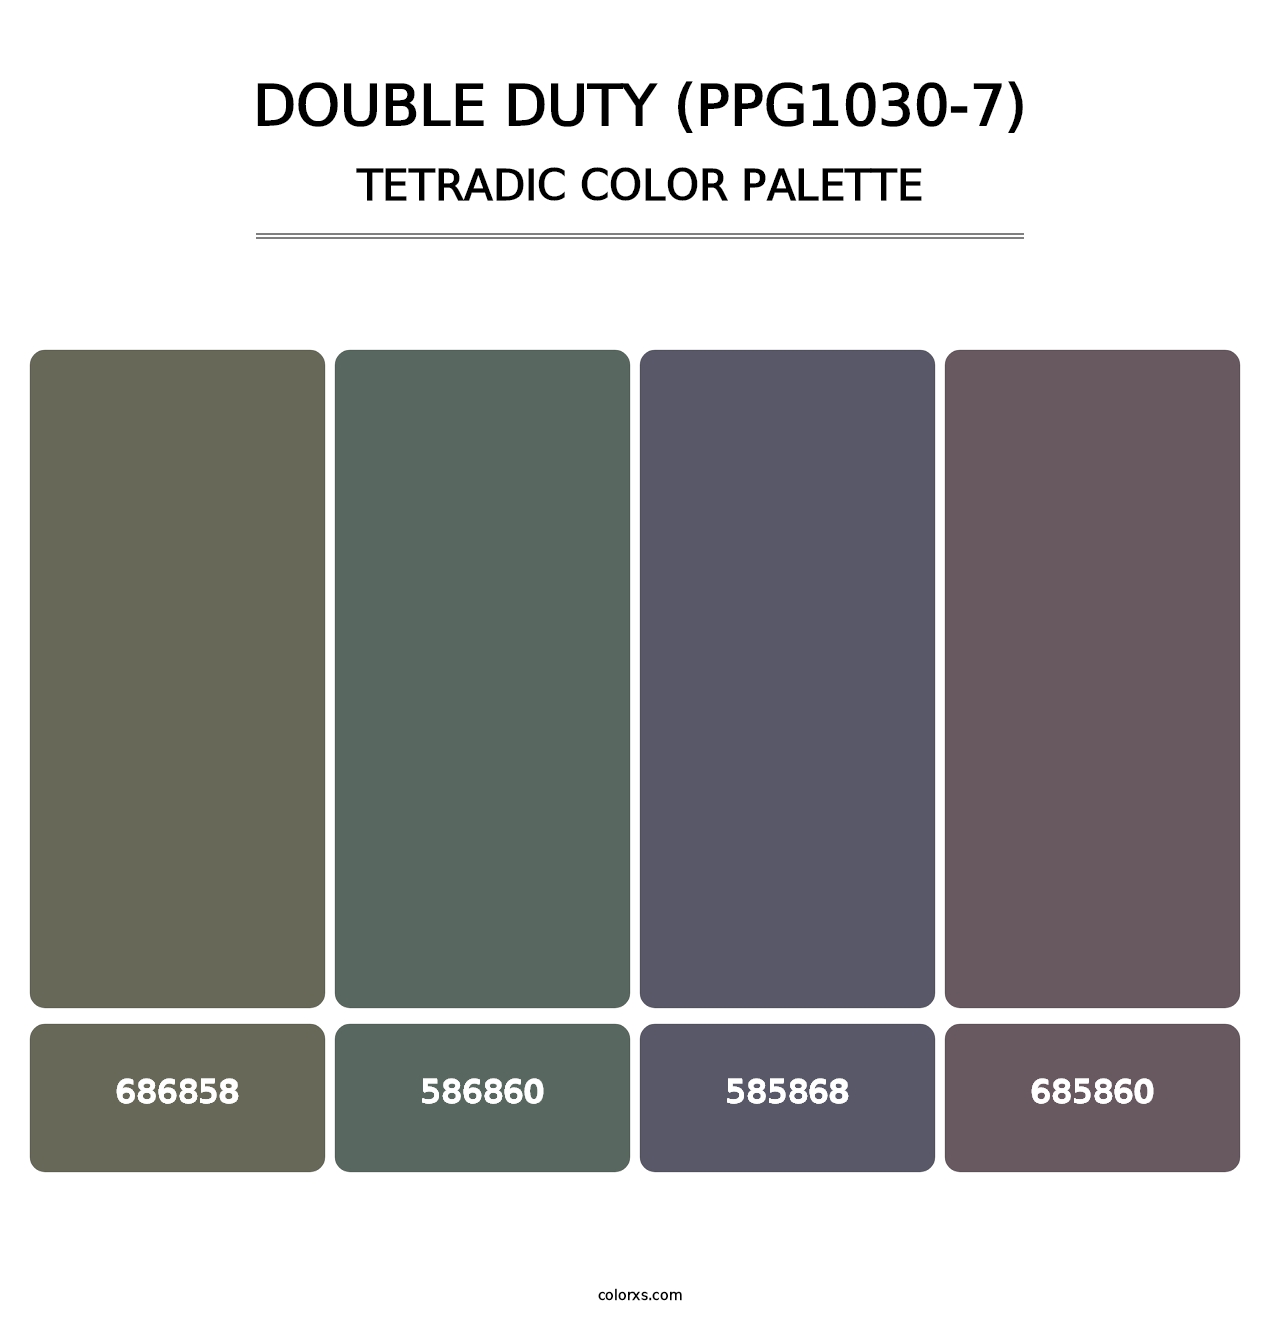 Double Duty (PPG1030-7) - Tetradic Color Palette